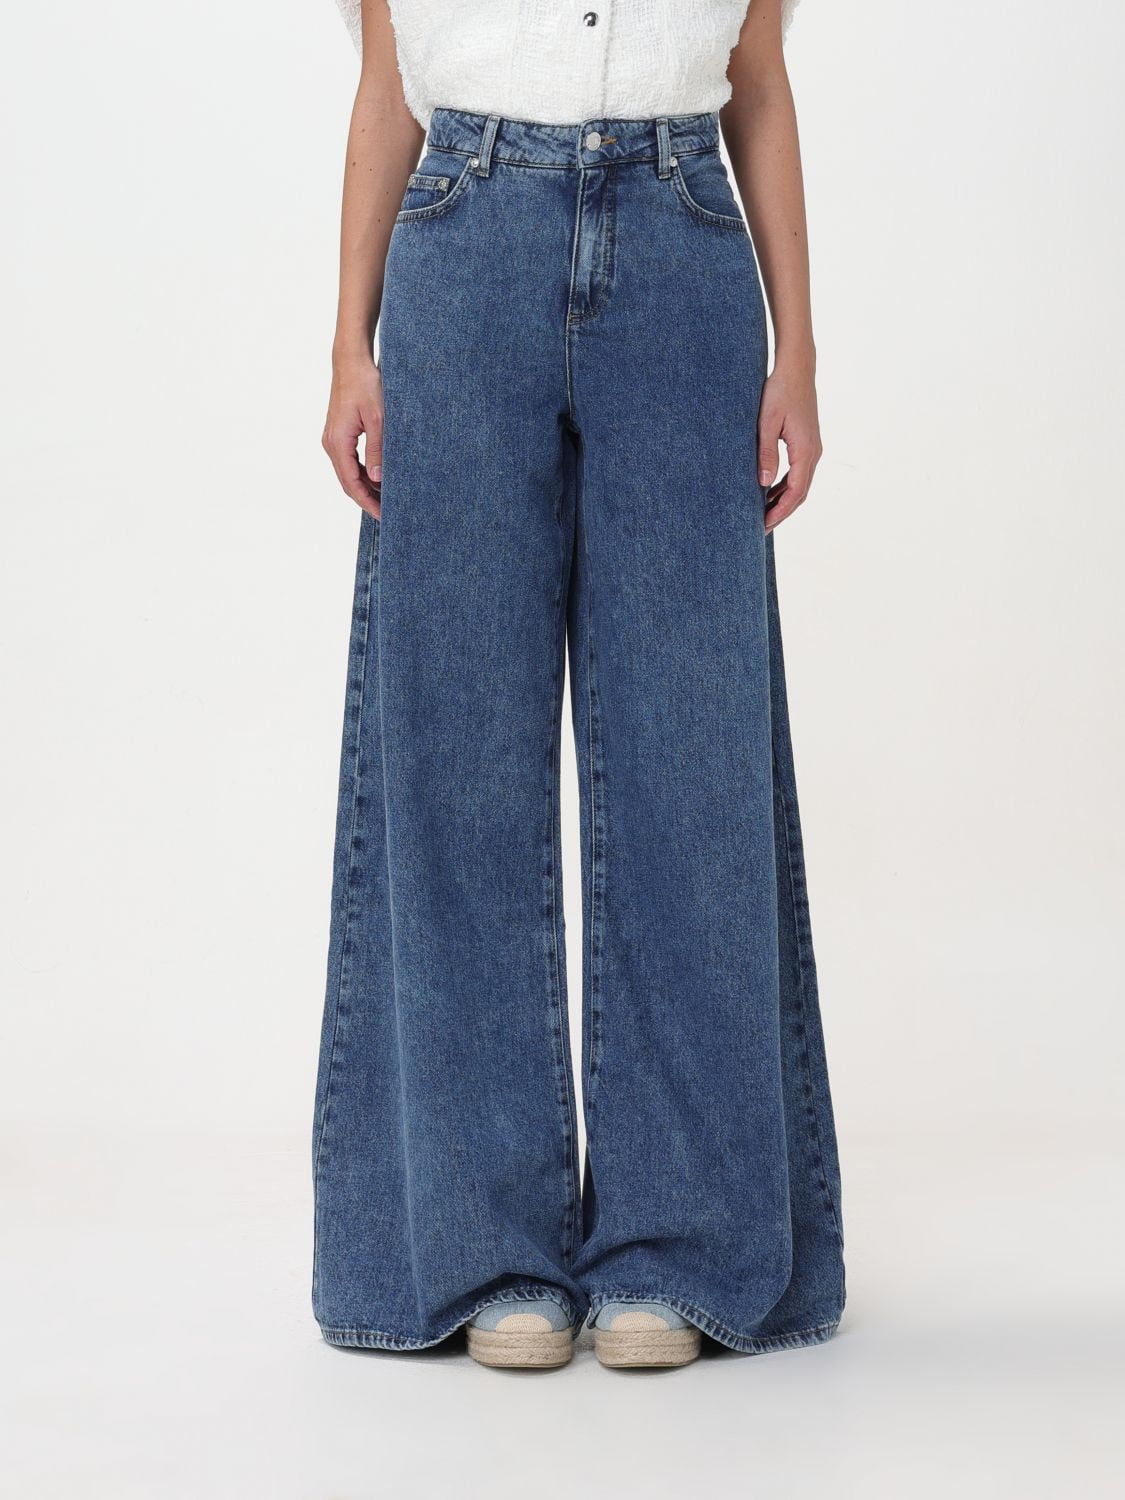 Moschino Jeans Jeans Woman Denim Woman - Walmart.com